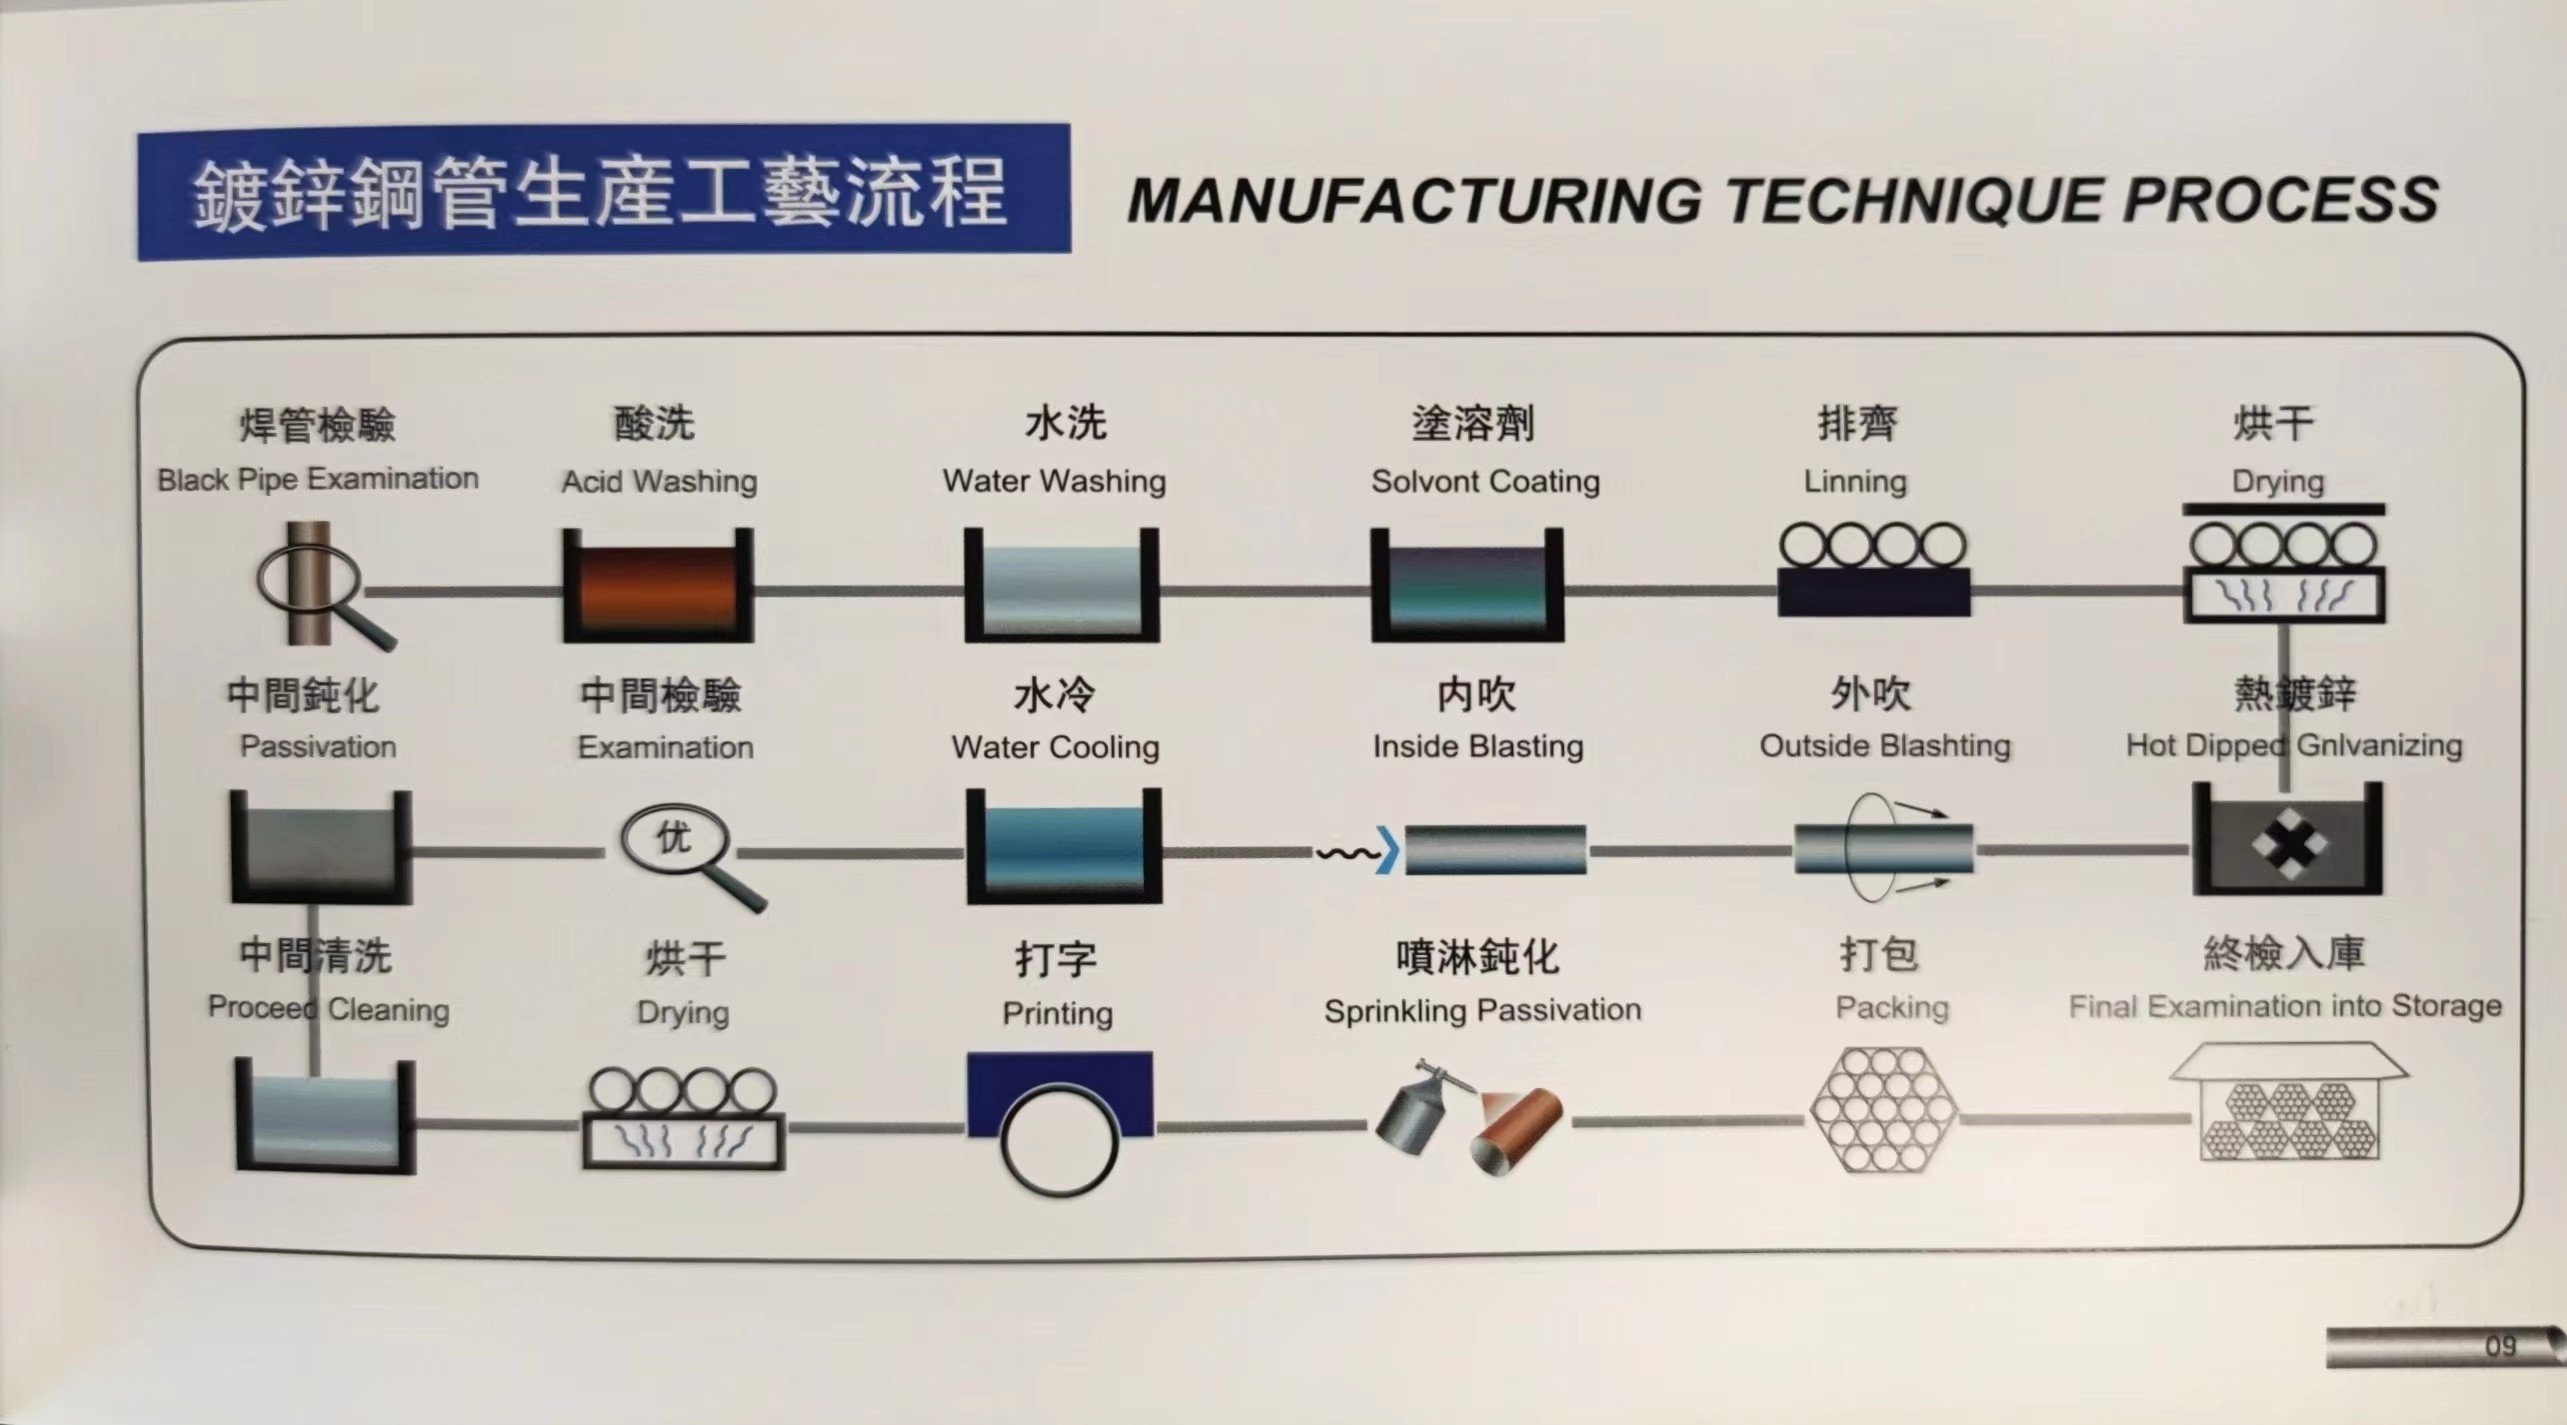 Manufacturing technique process